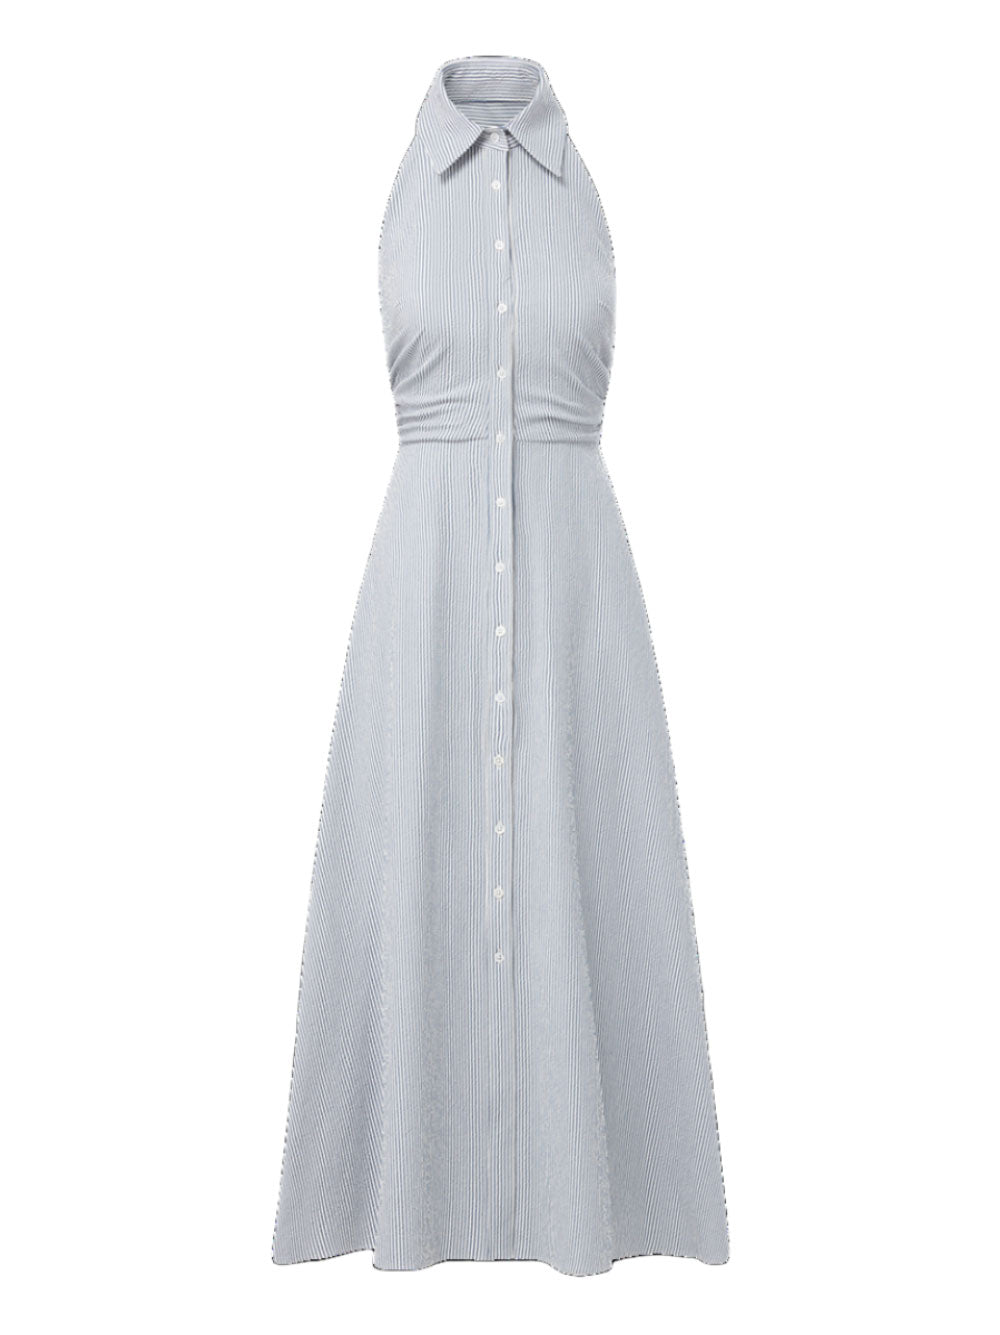 Veronica Beard Mackey Dress in Blue/White